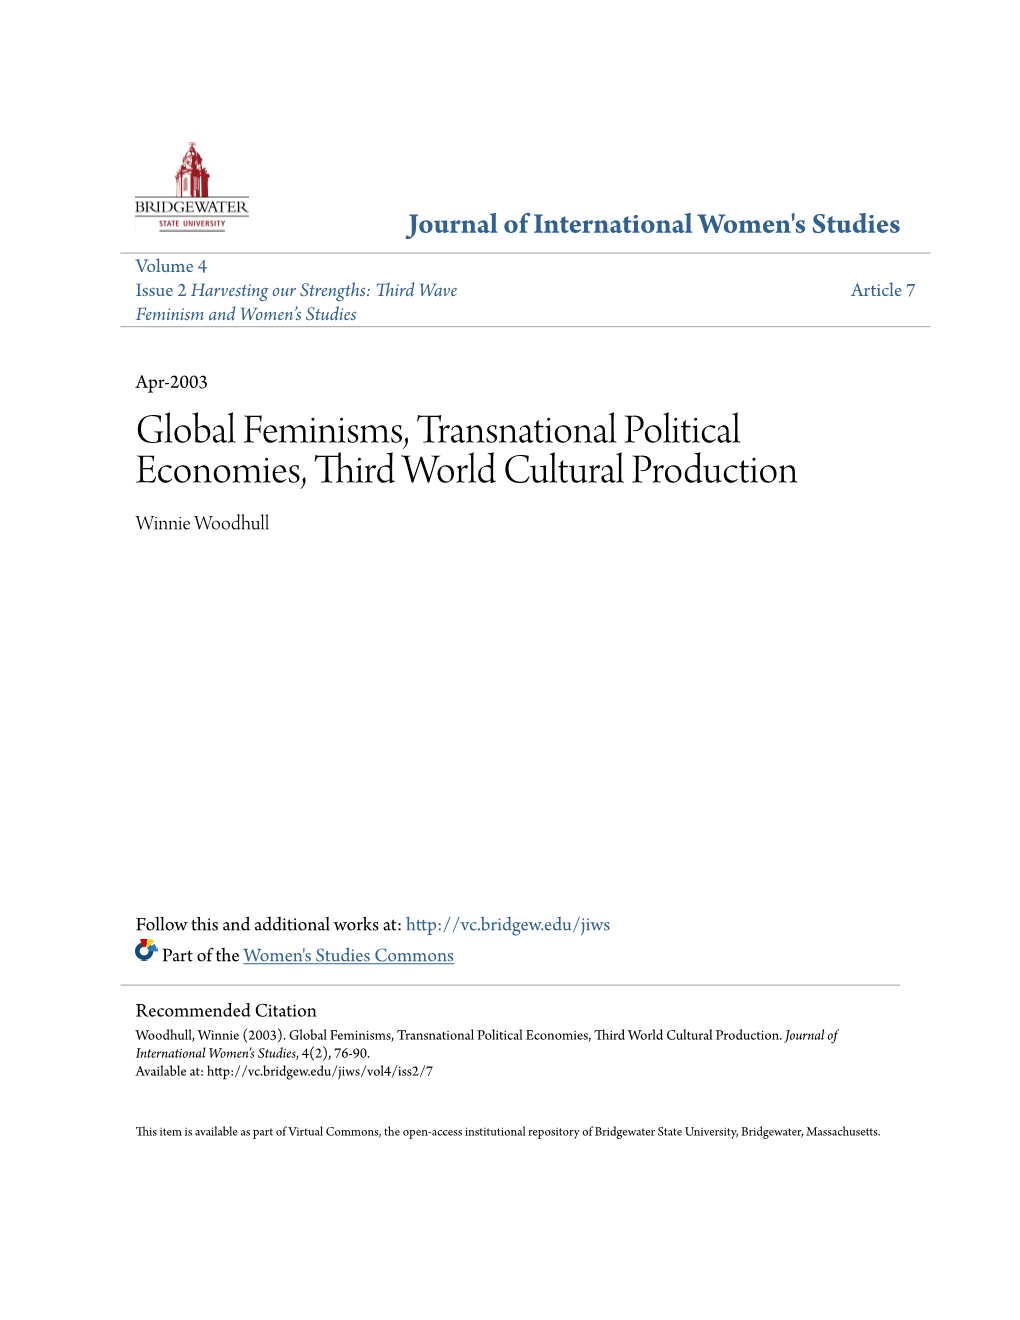 Global Feminisms, Transnational Political Economies, Third World Cultural Production Winnie Woodhull